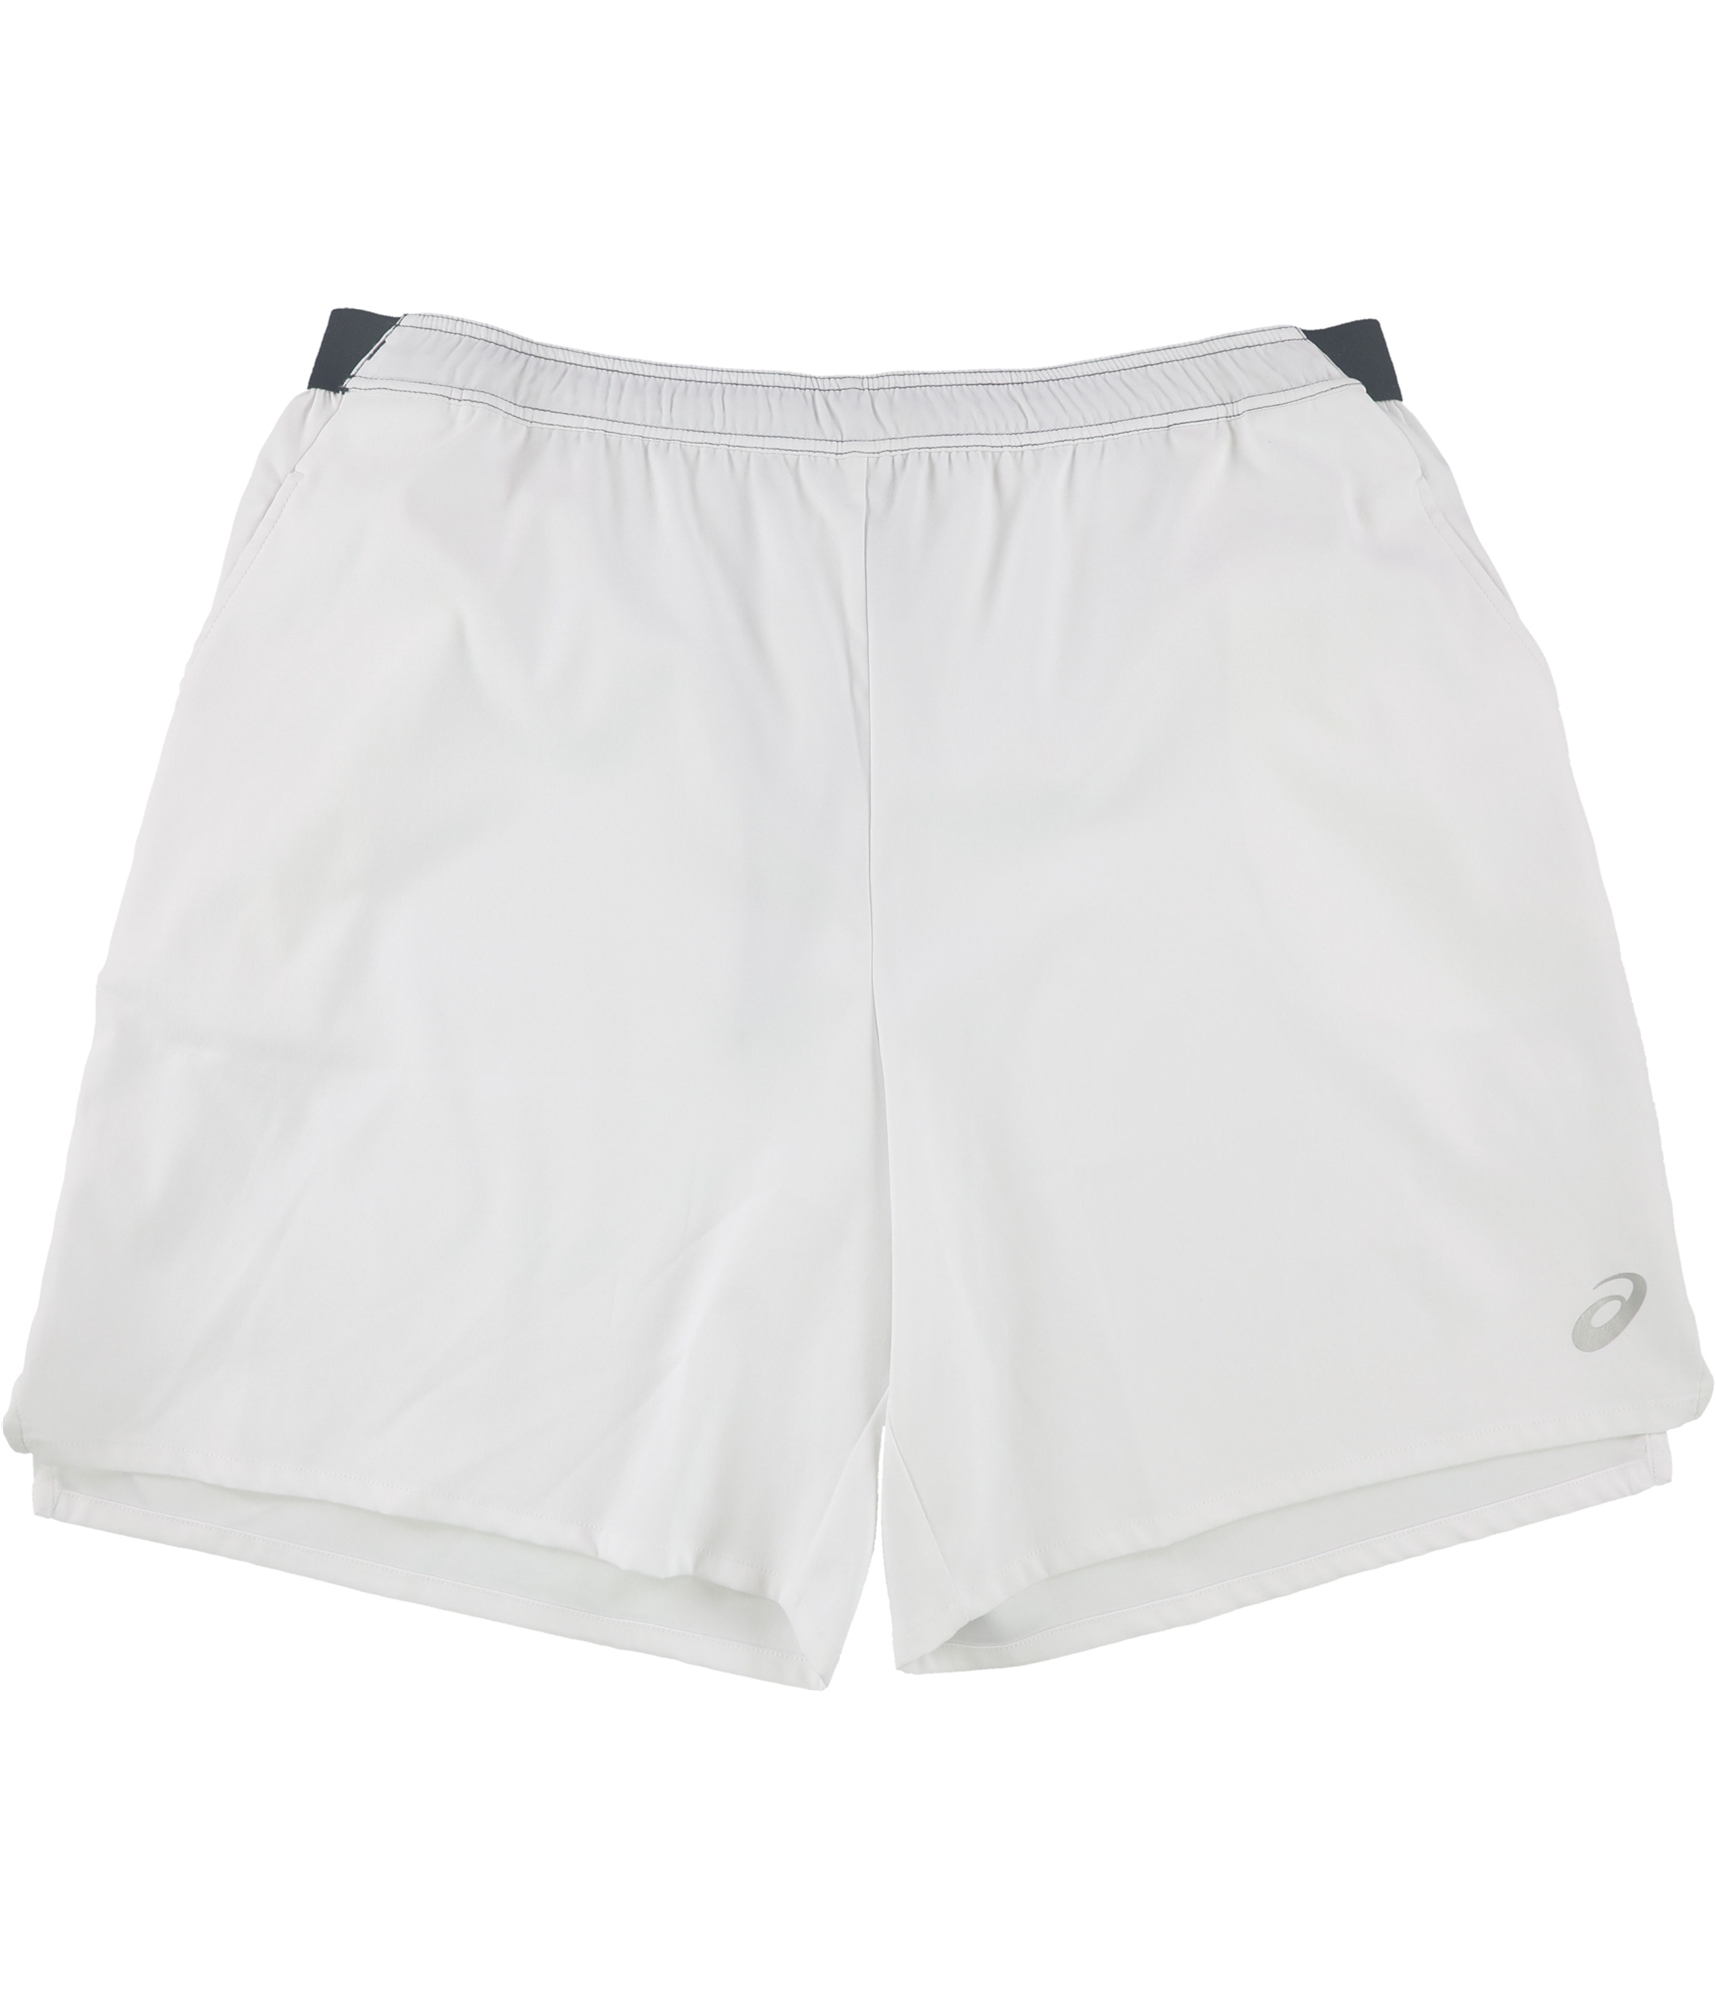 Two-tone-elastic-waist-running-shorts